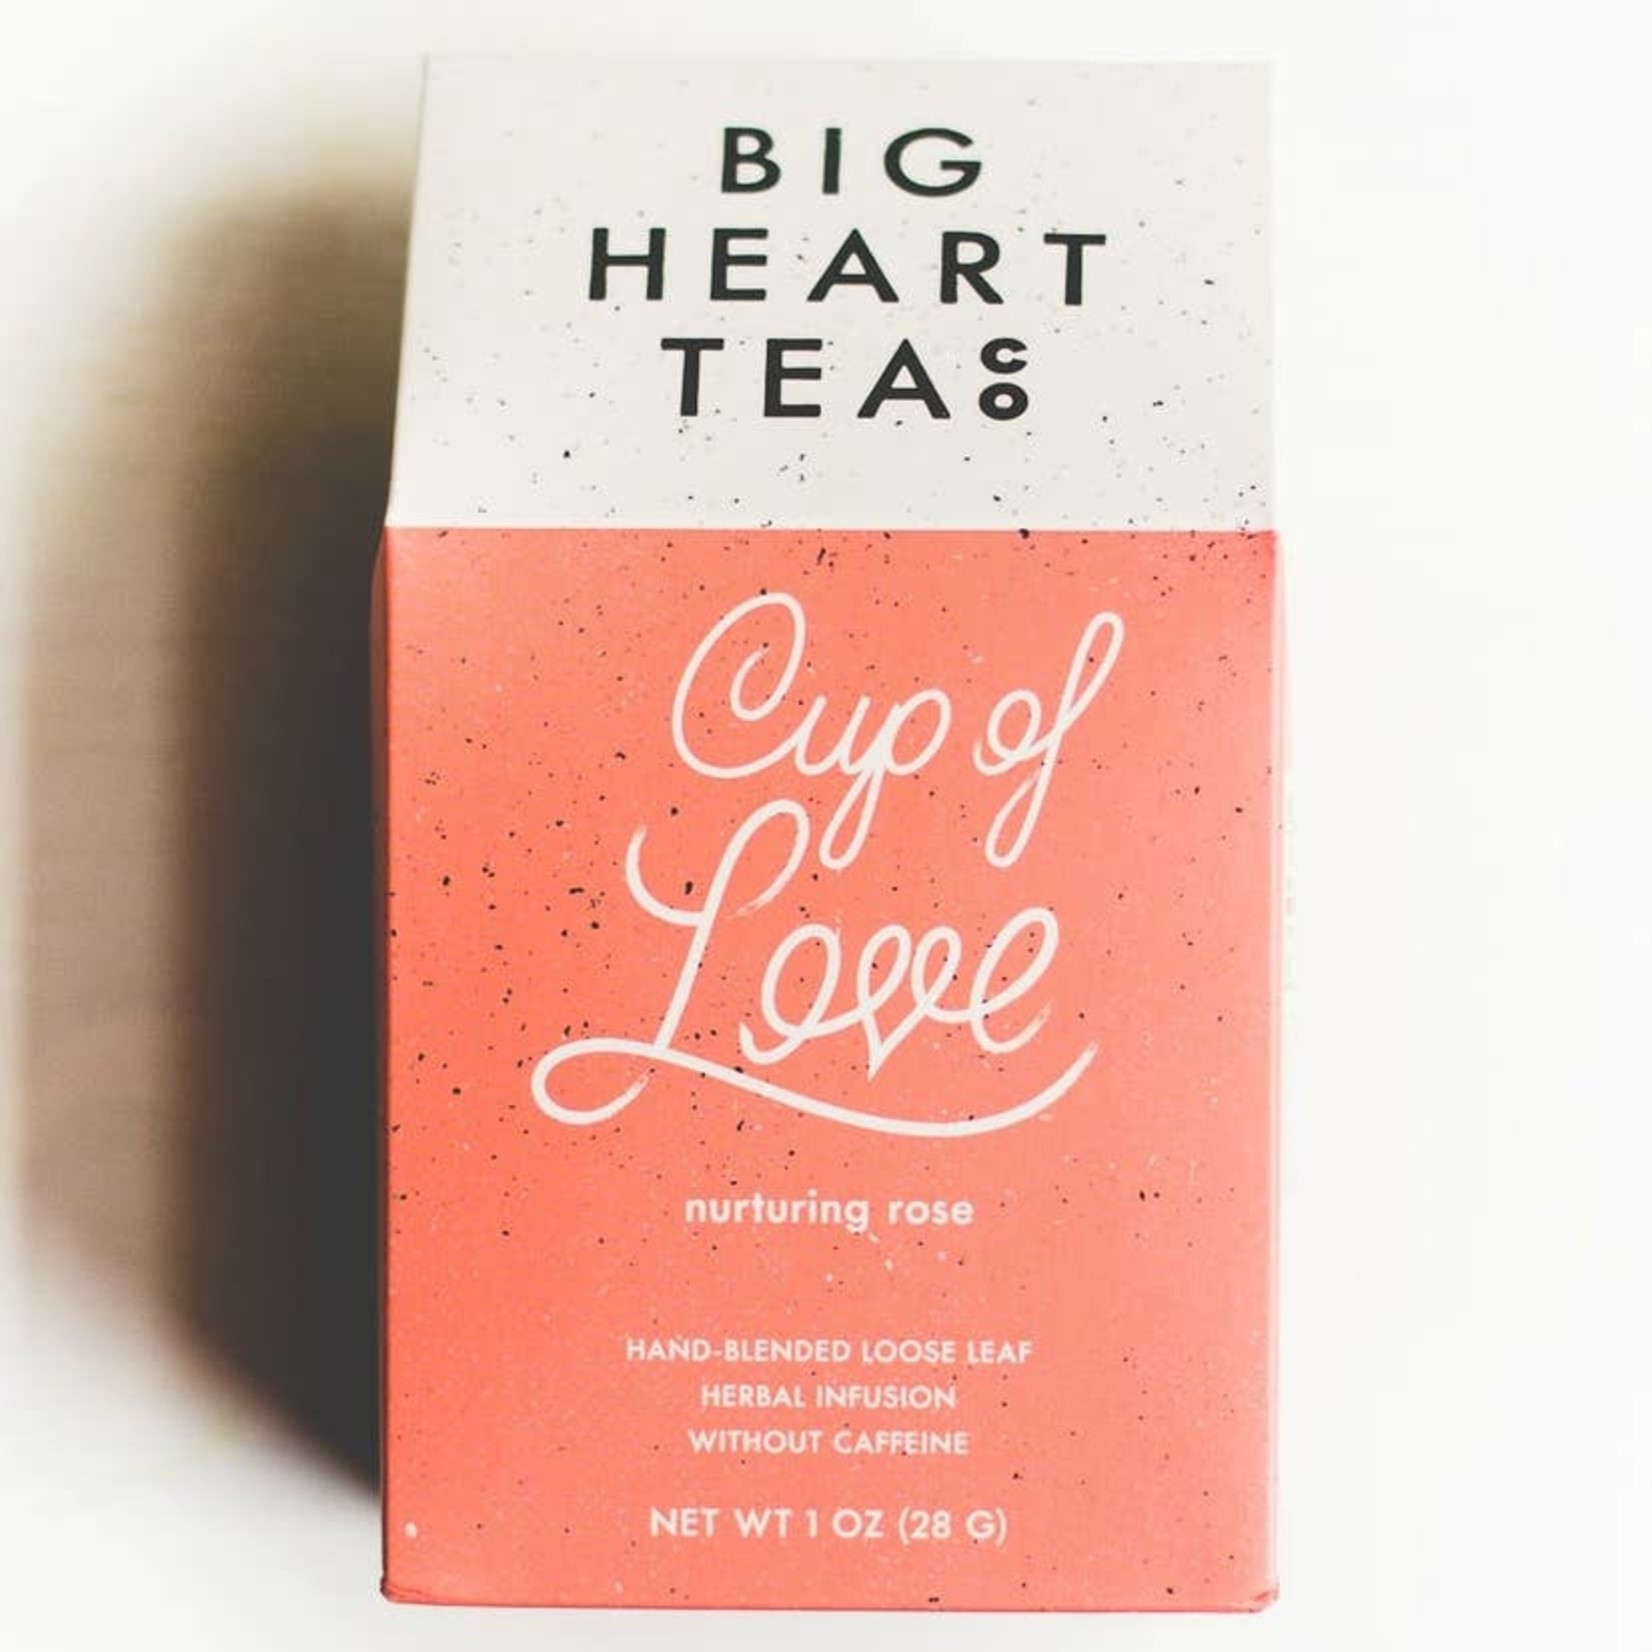 Big Heart Tea Co Cup of Love Tea